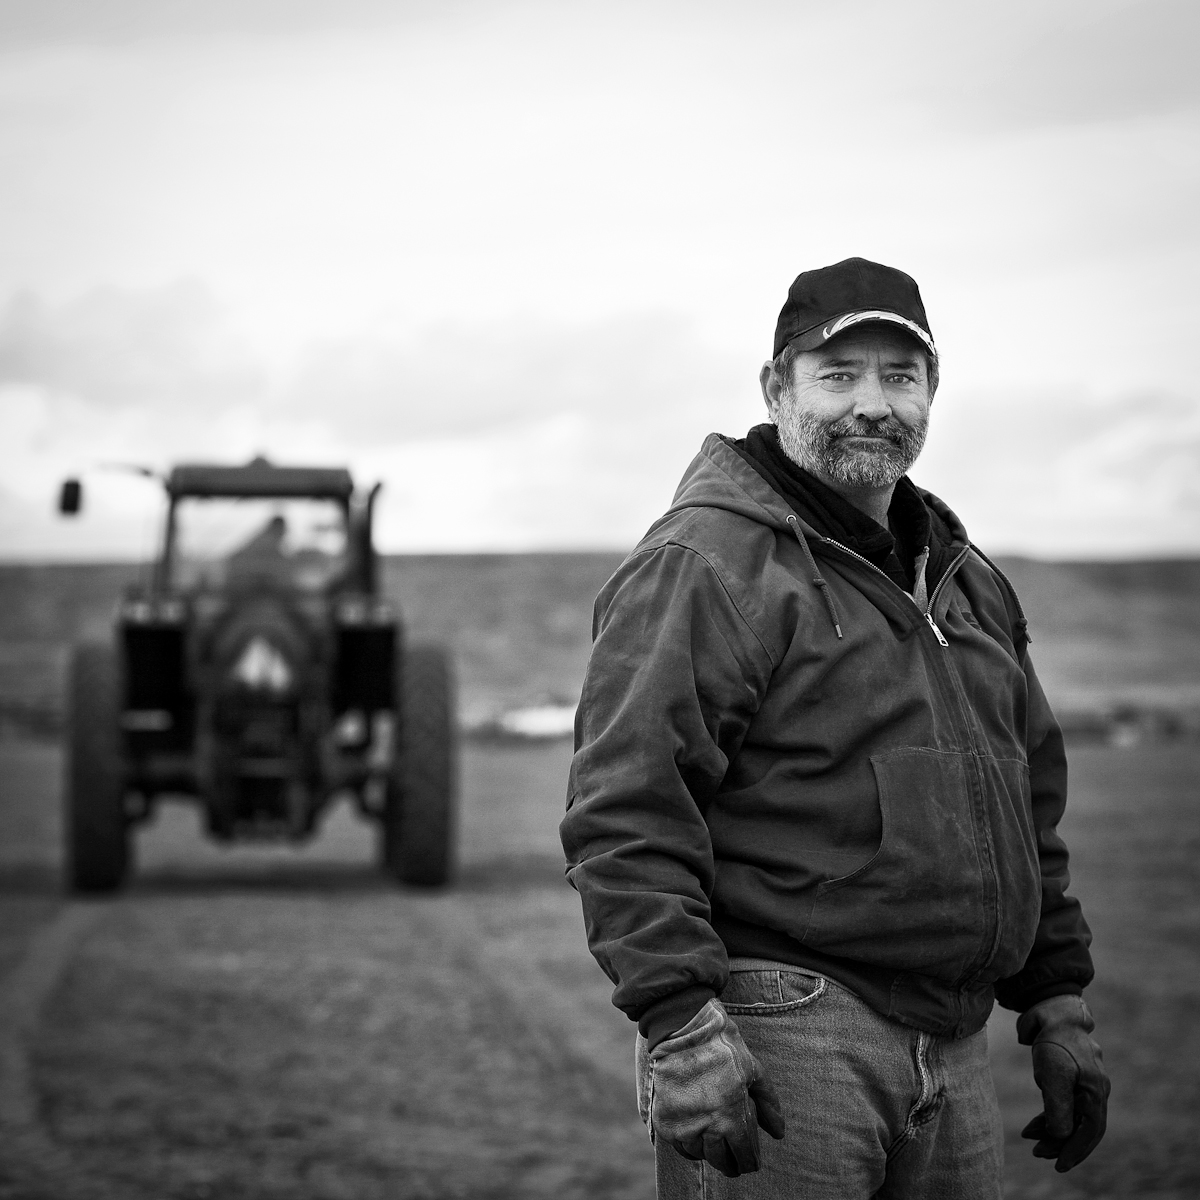   Jerry Faxon, 4th generation farmer.  